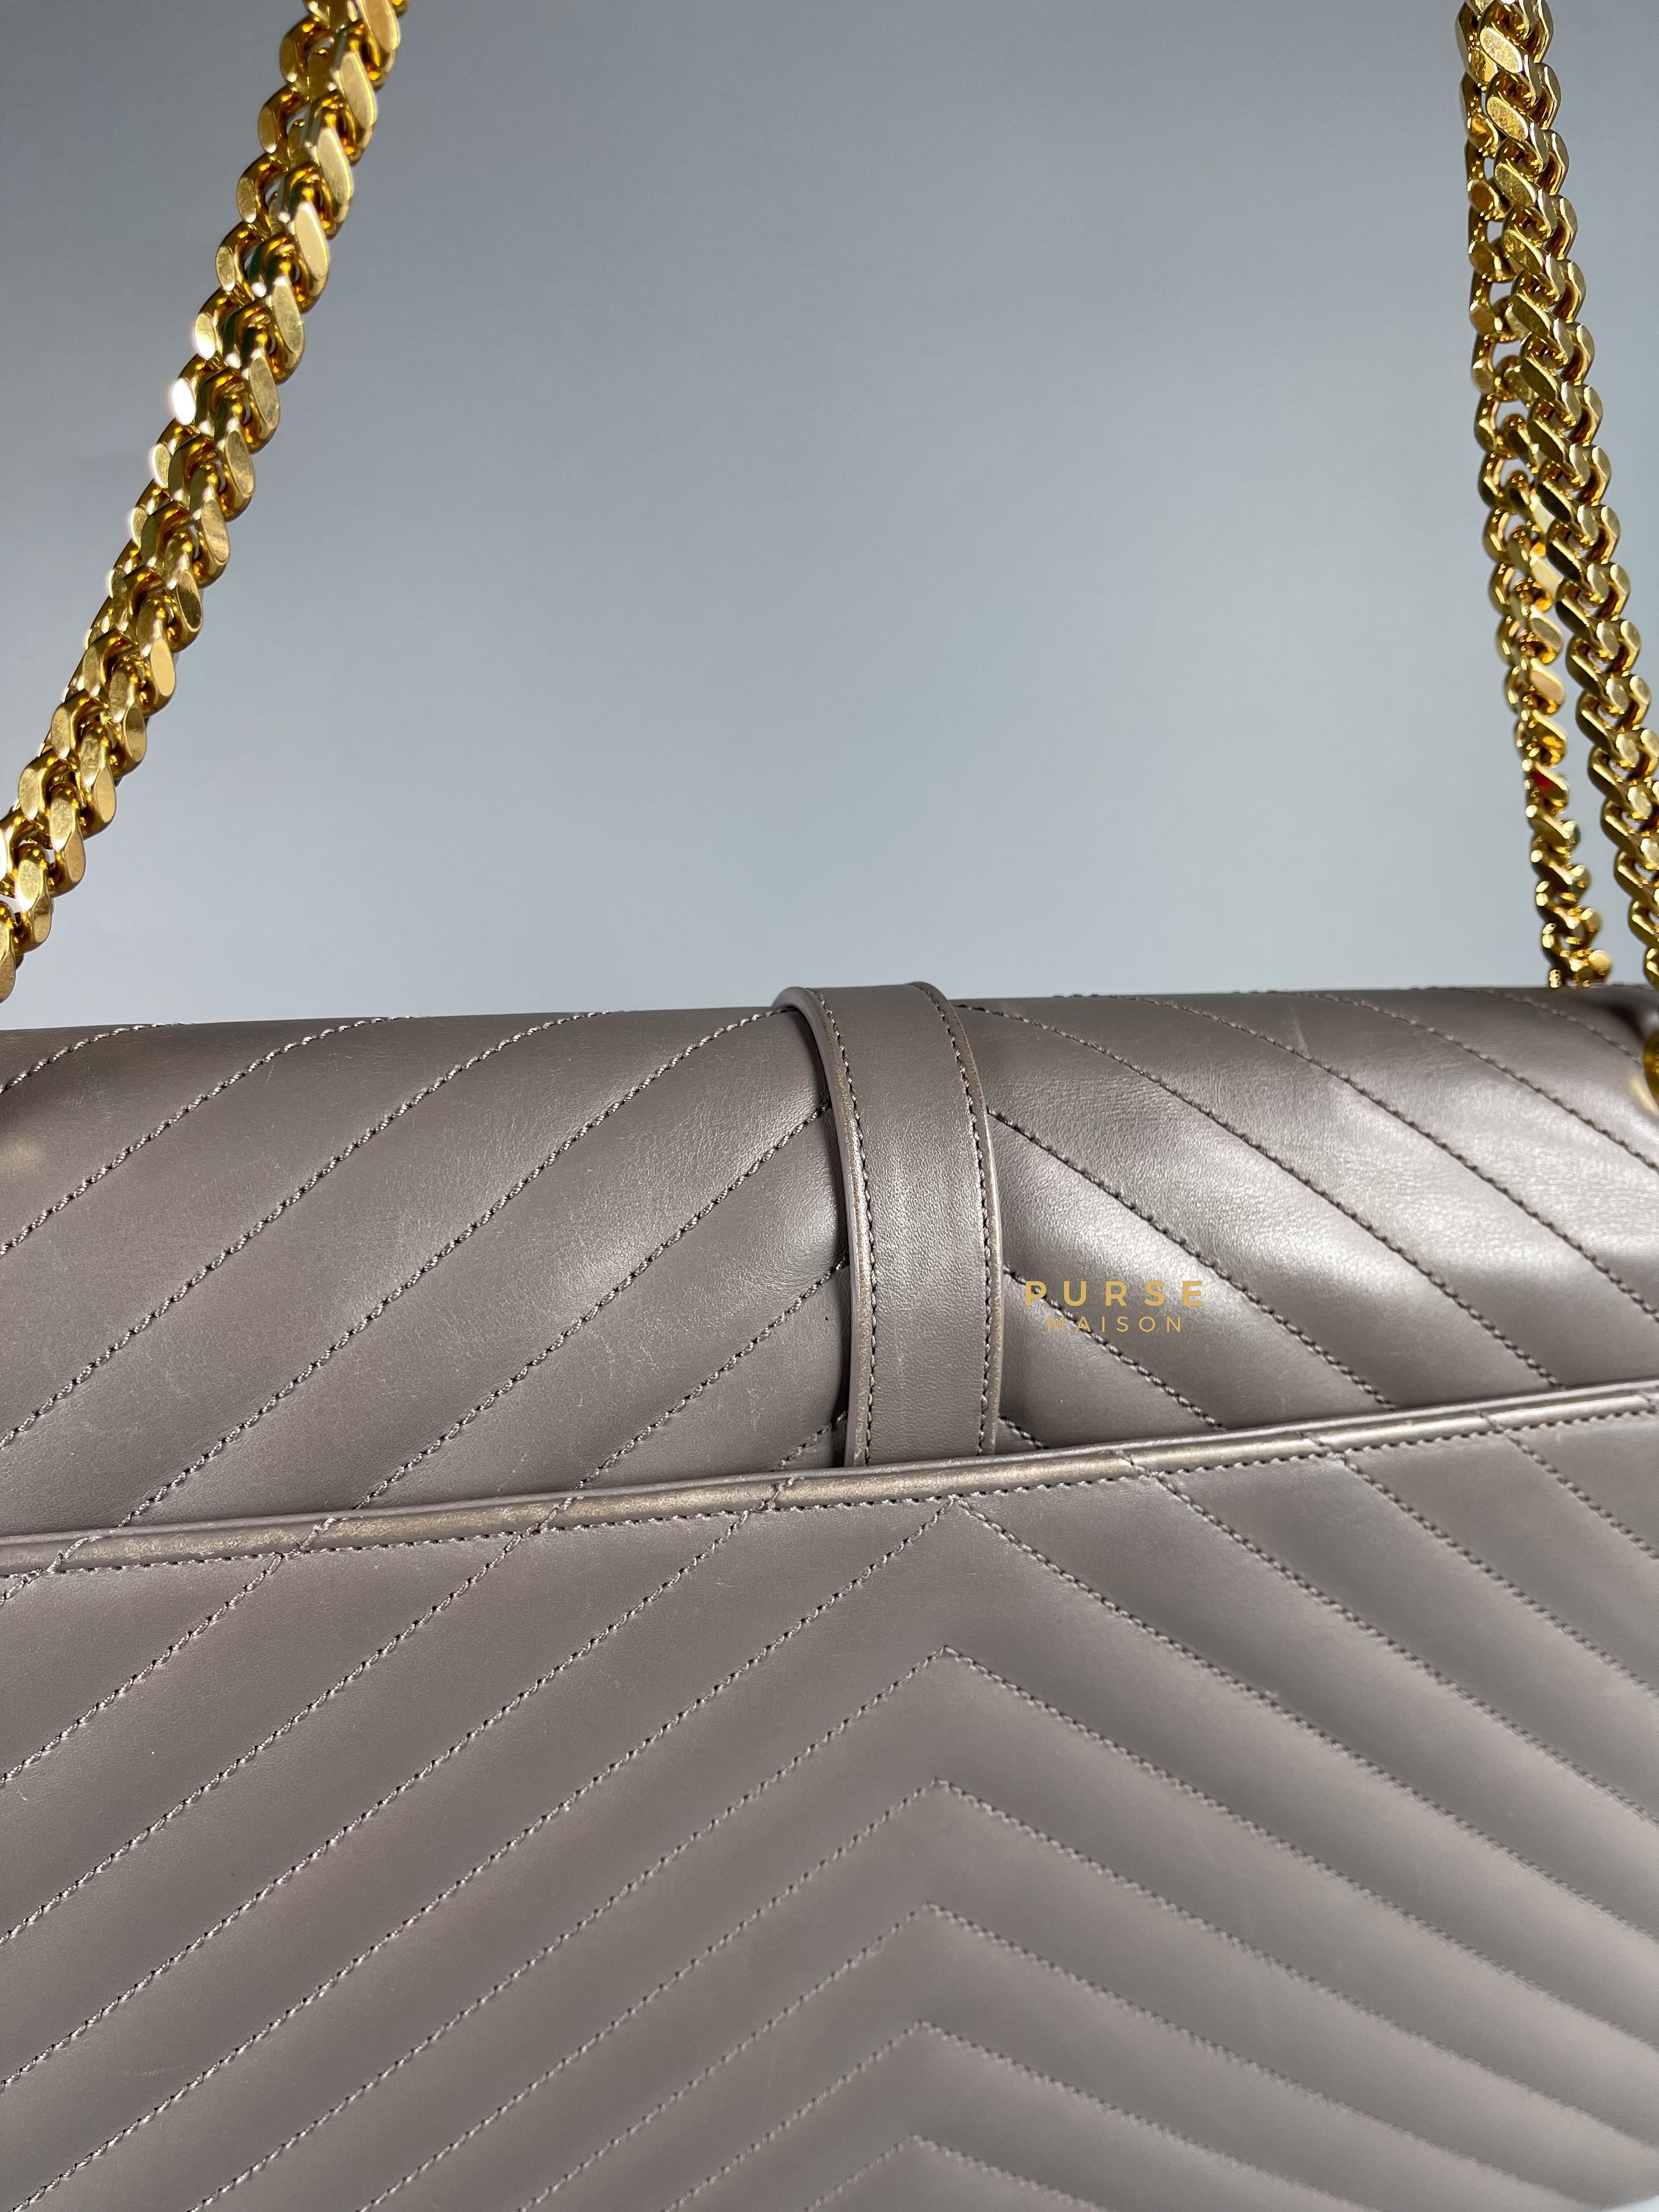 YSL Envelope Large Bag in Monogram Gray Leather | Purse Maison Luxury Bags Shop